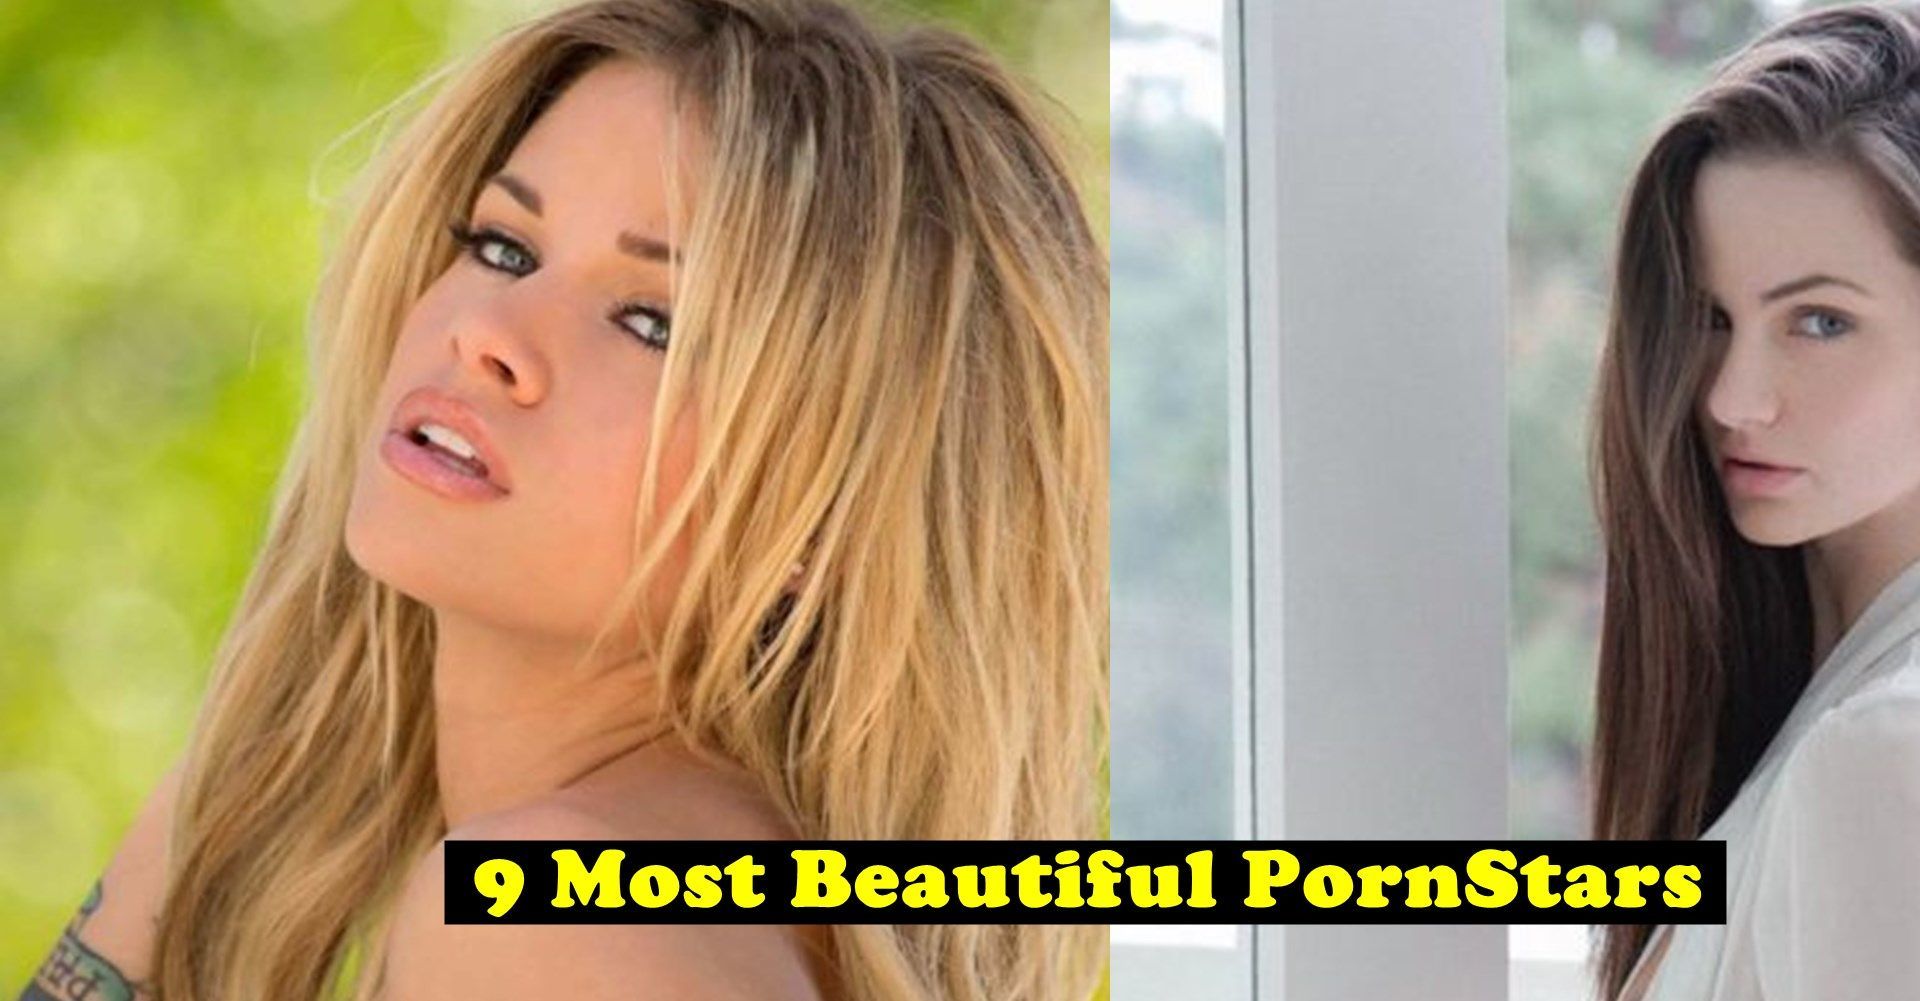 Most pretty pornstar